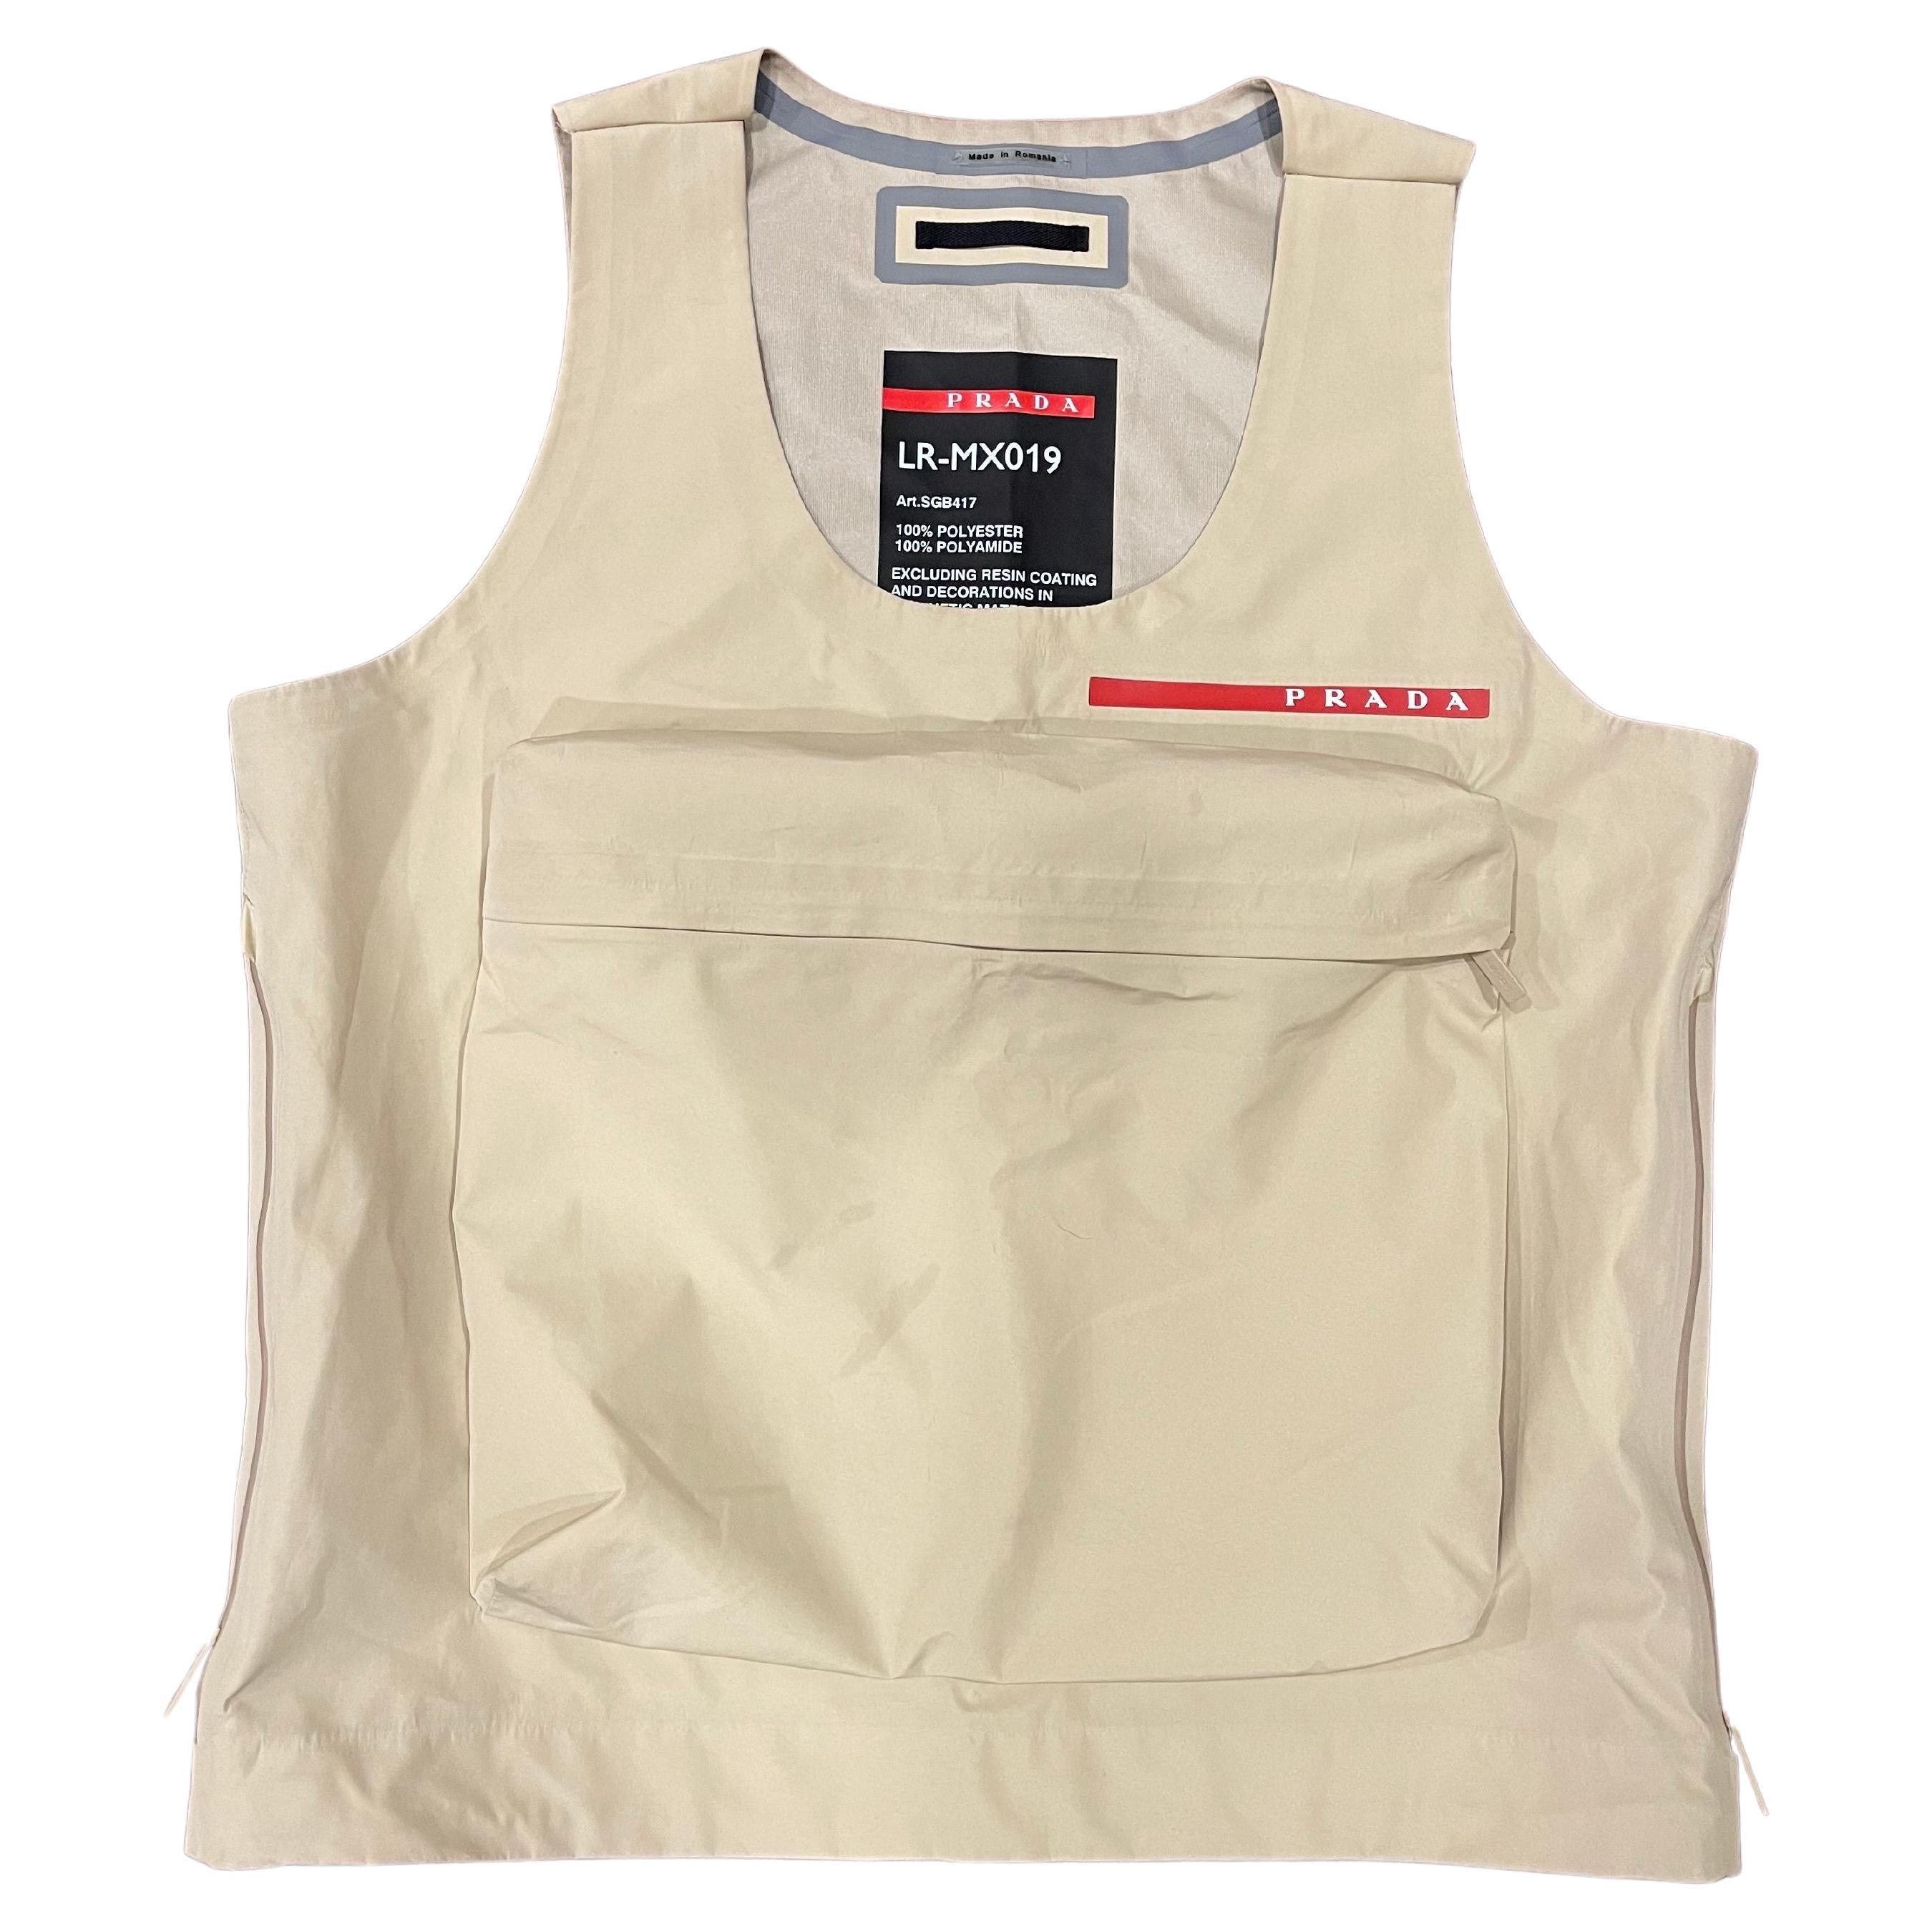 Prada Linea Rossa Cargo Pocket Tan/Beige Vest size Small